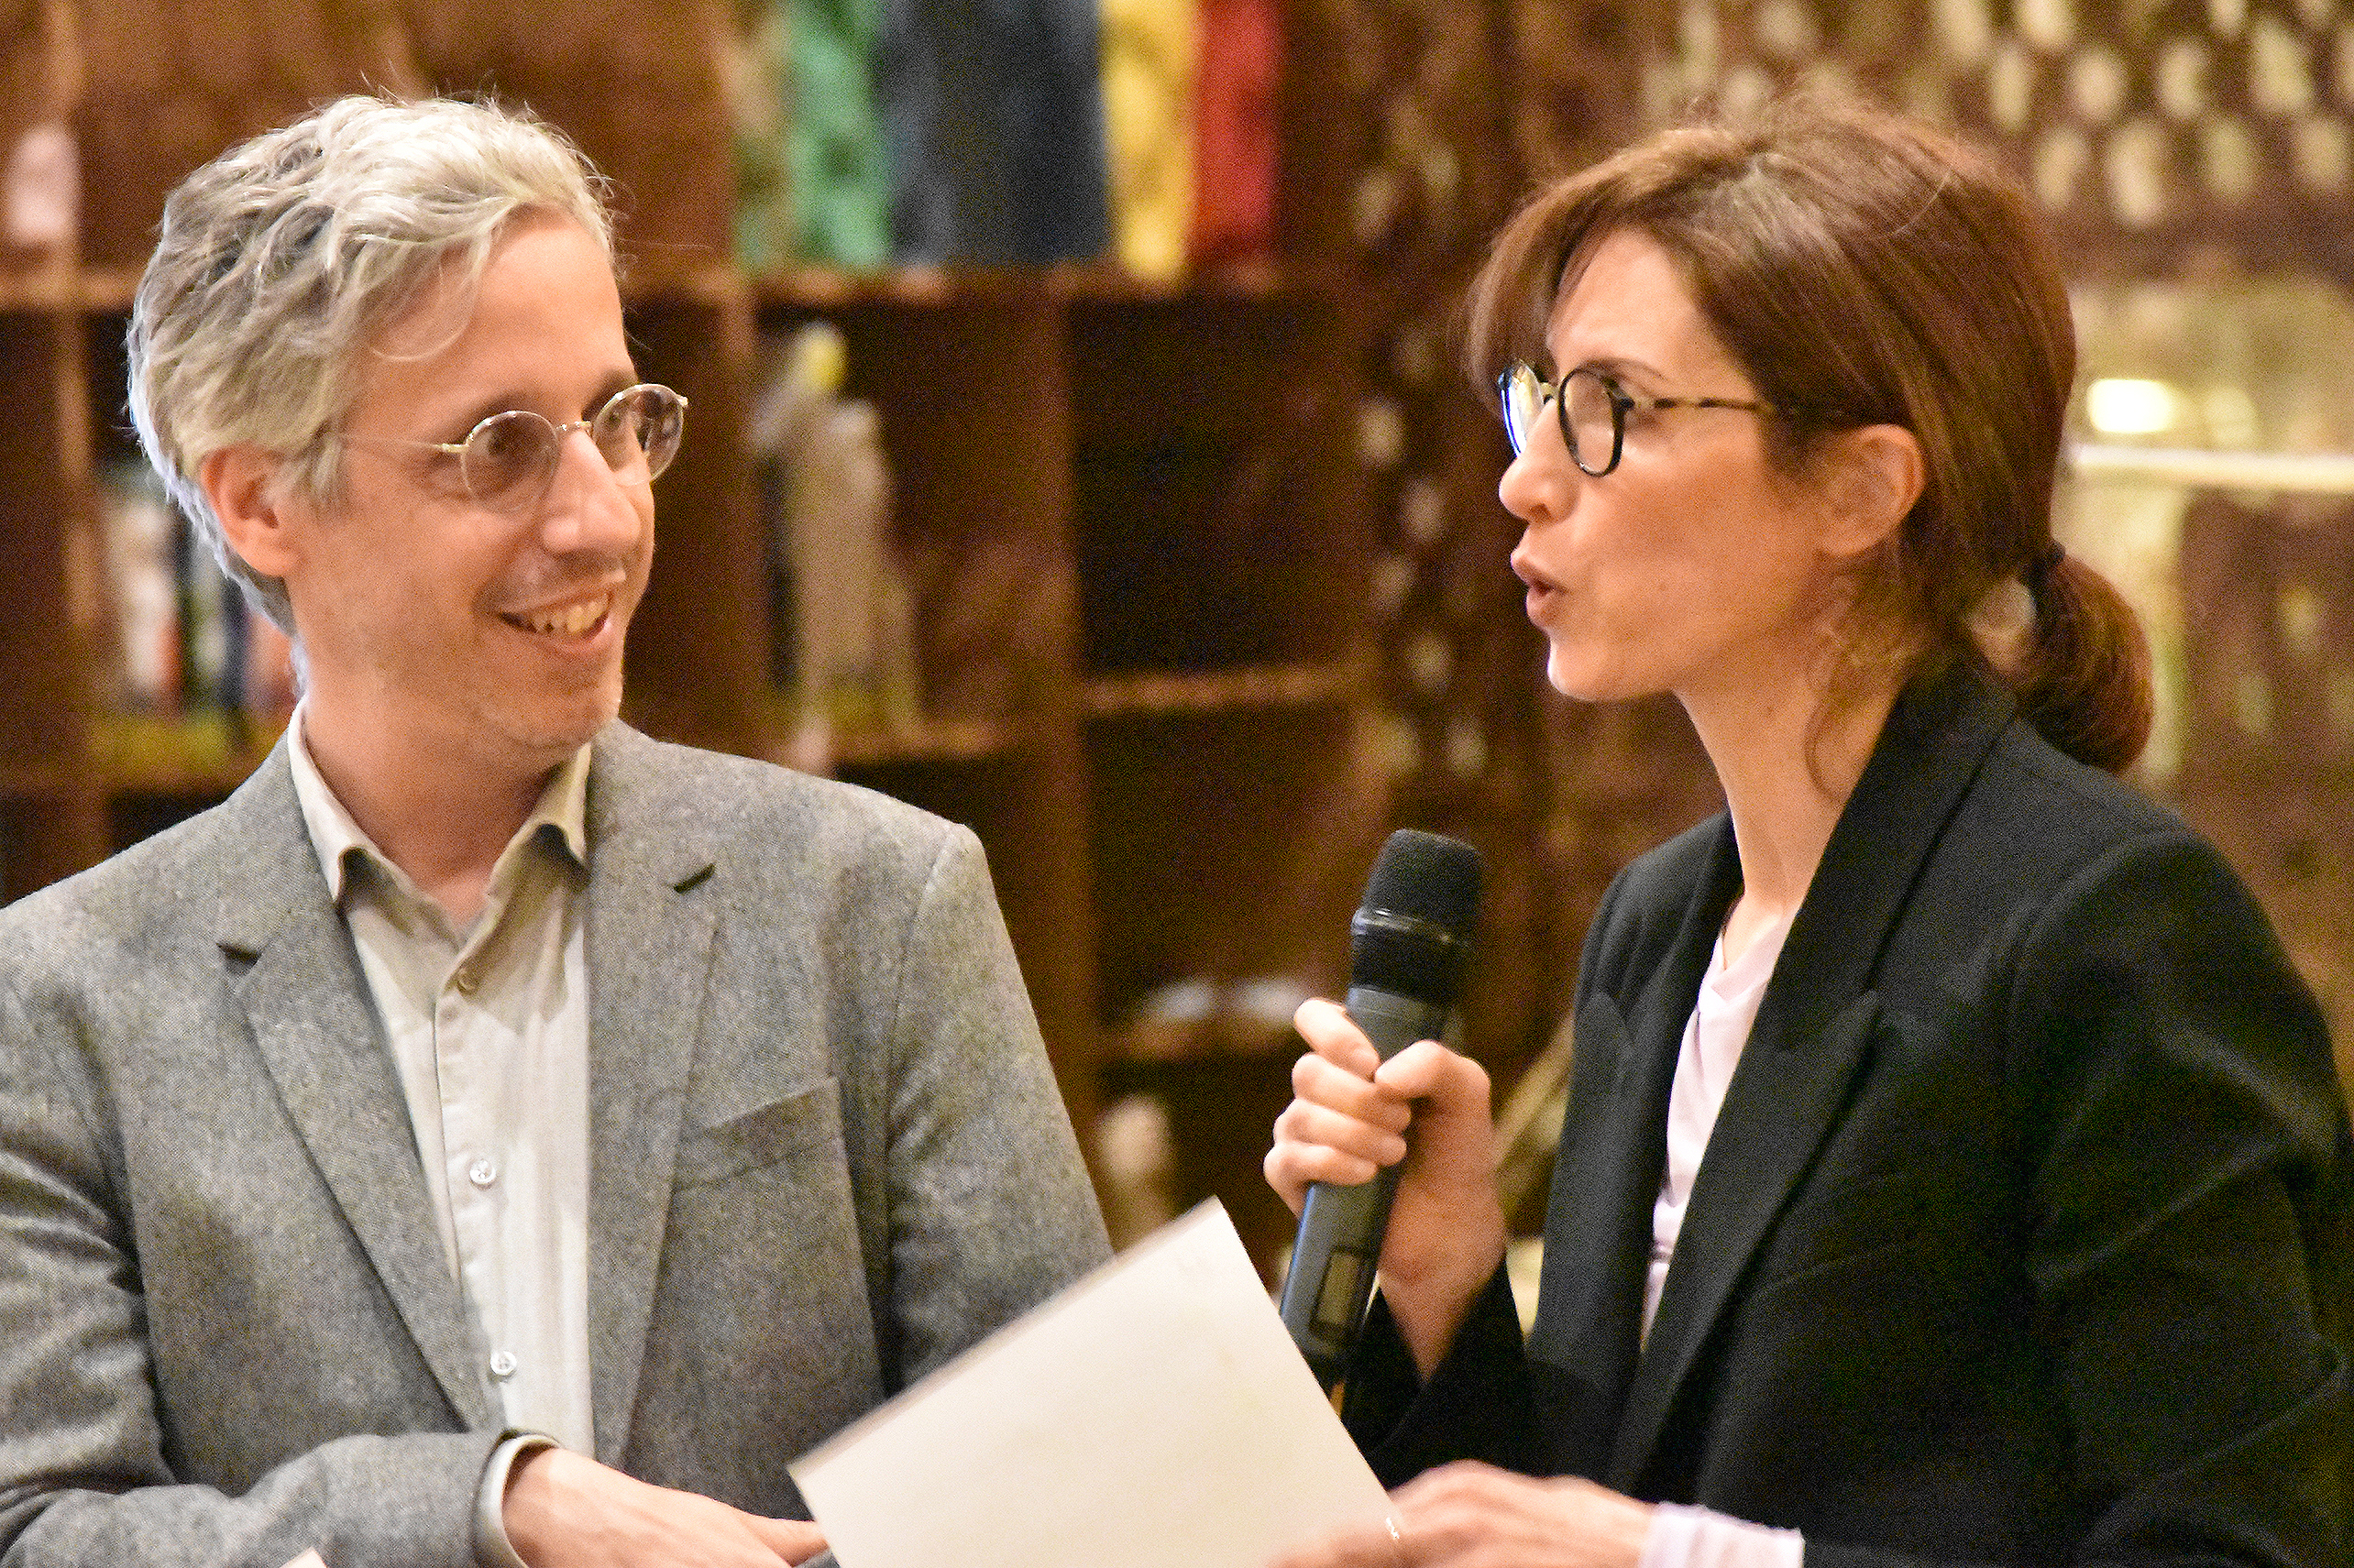 symposium organizers Daniel Lefcourt and Marisa Mazria Katz